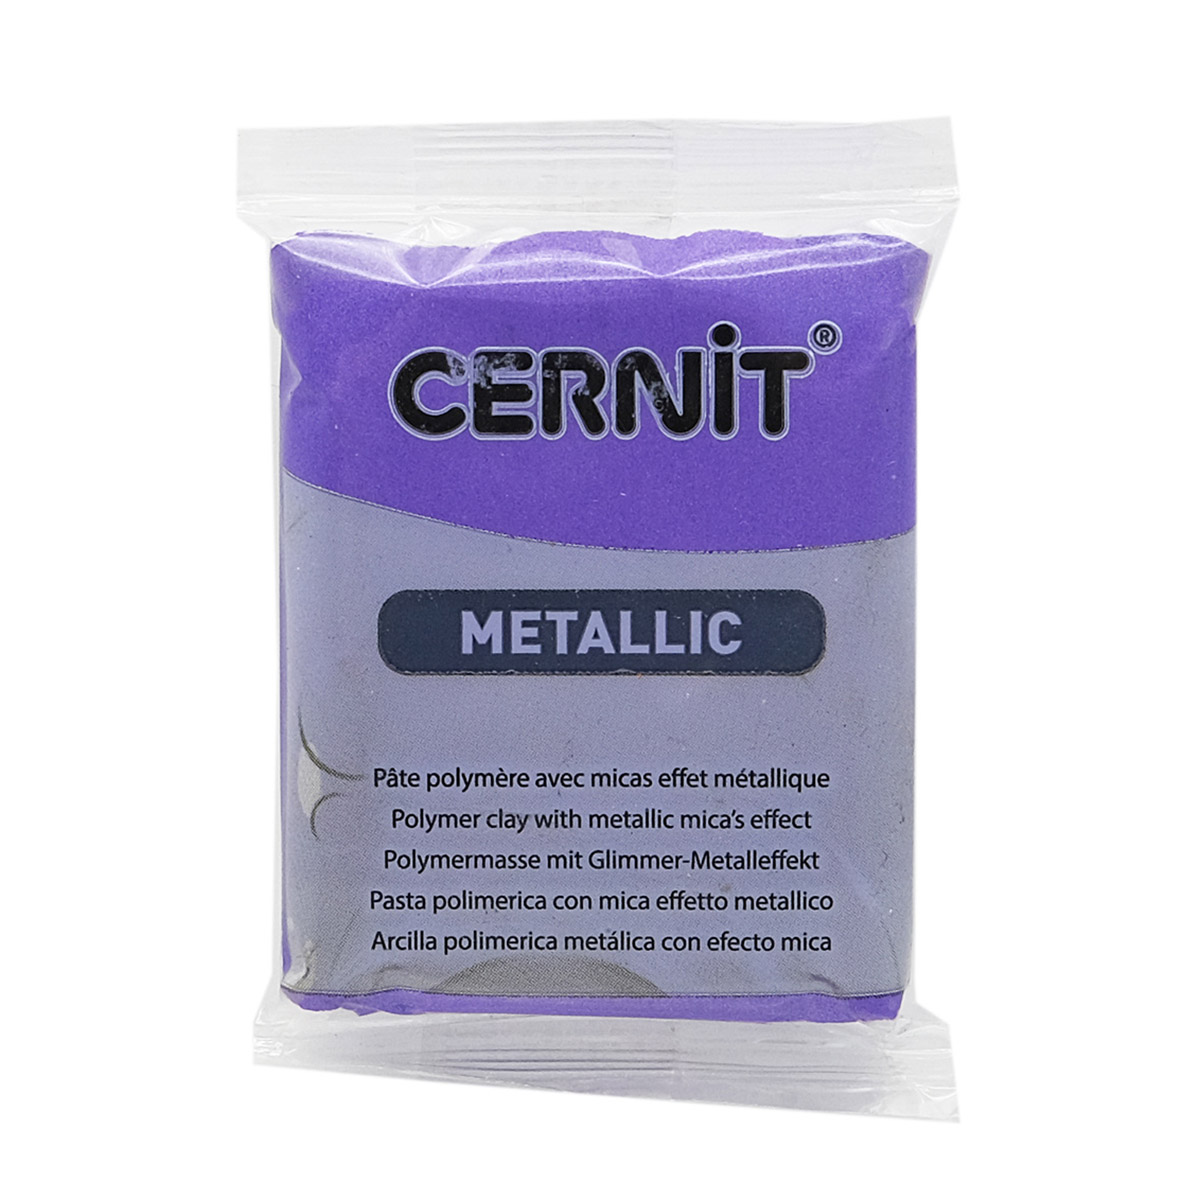 Пластика Cernit Metallic, 56 грамм, цвет 900 фиолетовый, арт. CE0870056